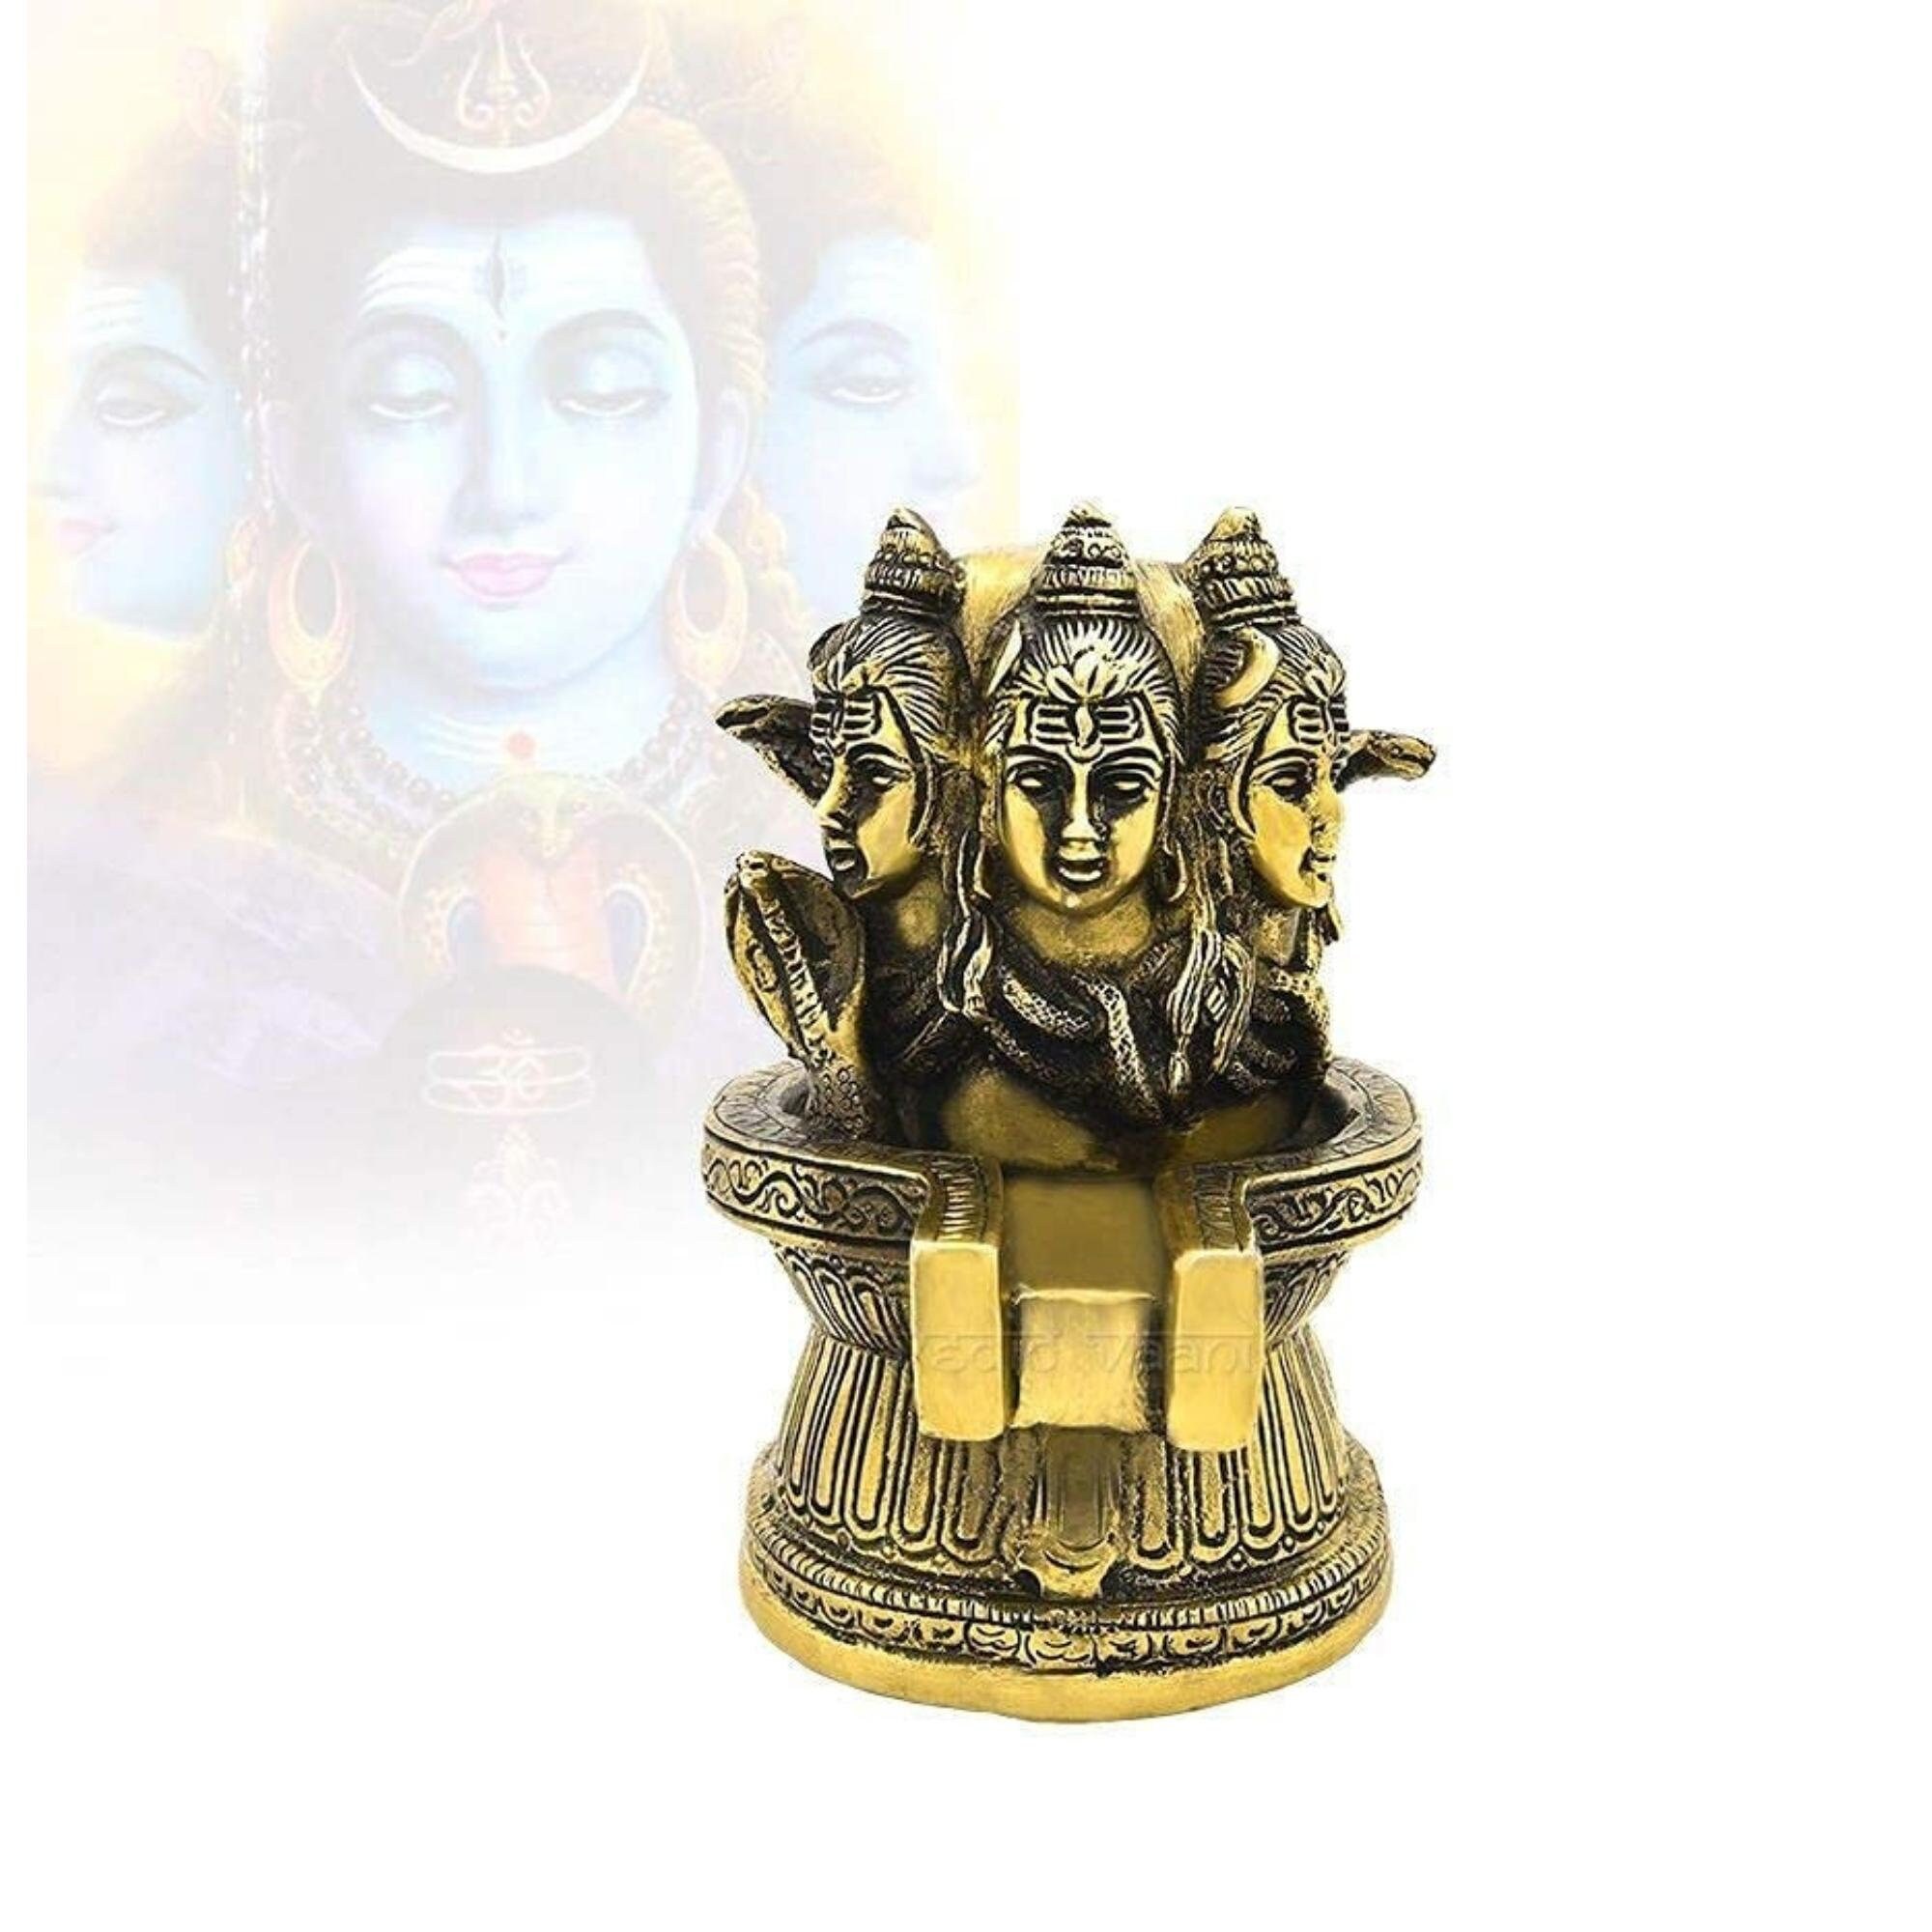 Brass Lord Trimurthi Shiva Ling Lingam Shivling Statue Antique